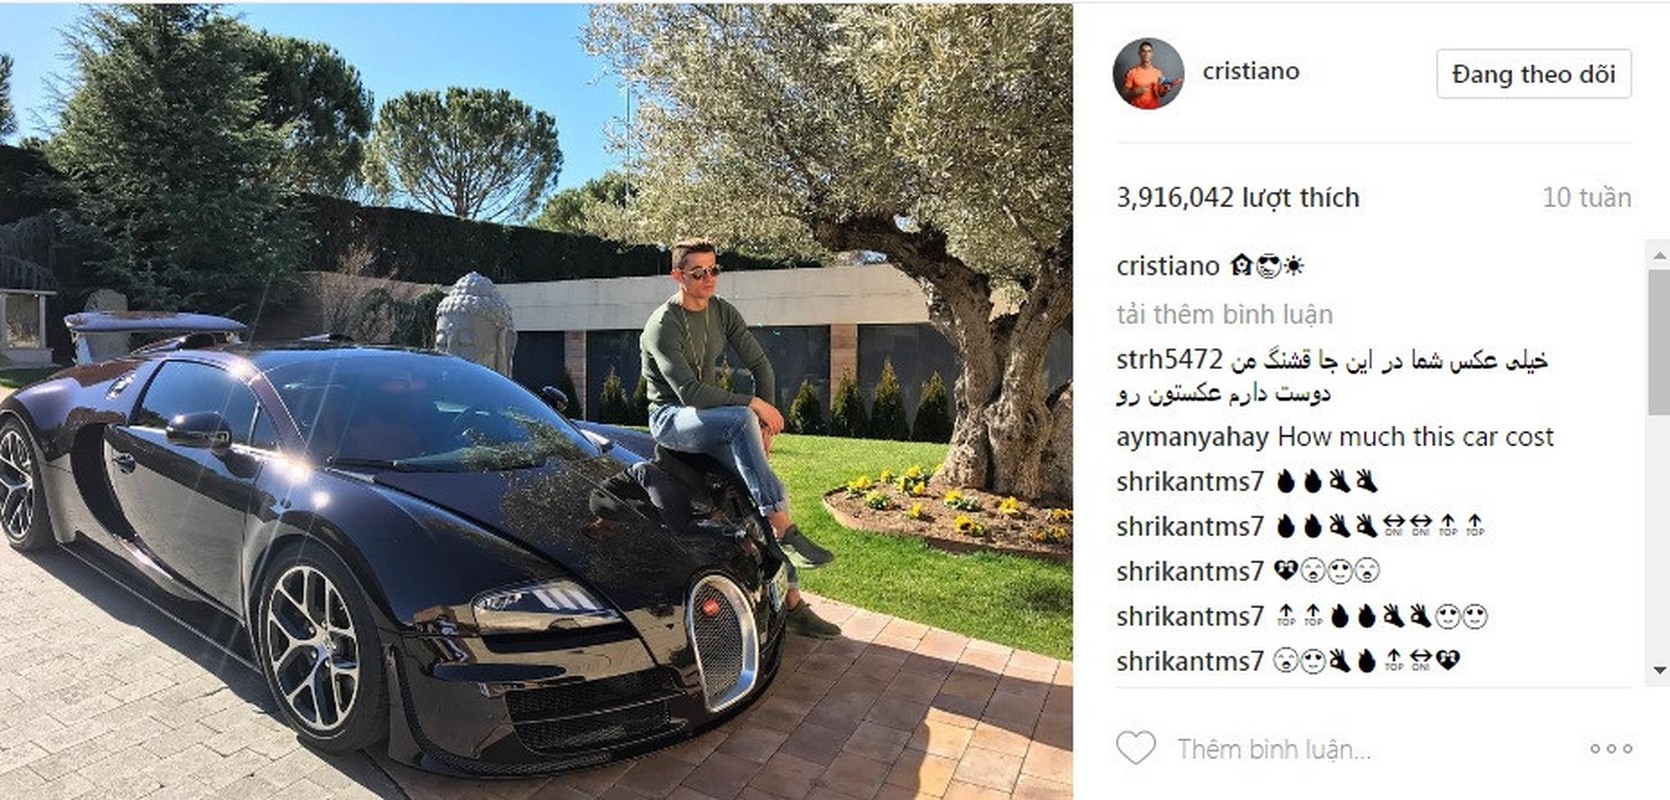 Top 10 anh nhan sieu bao like cua Ronaldo tren Instagram